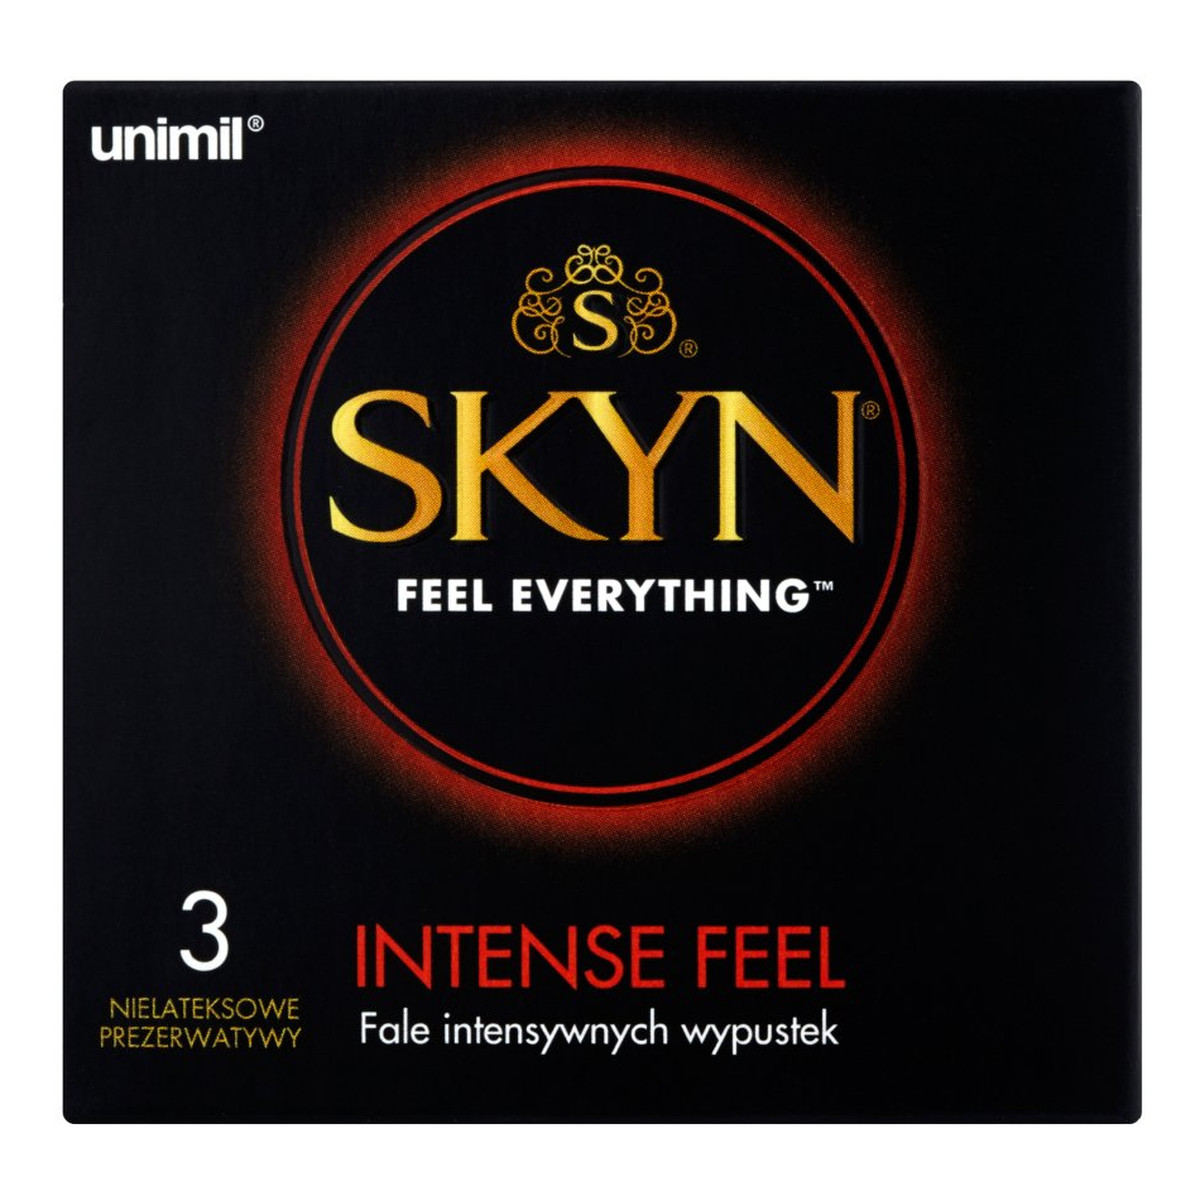 Unimil Skyn Feel Everything Intense Feel Nielateksowe prezerwatywy 3szt